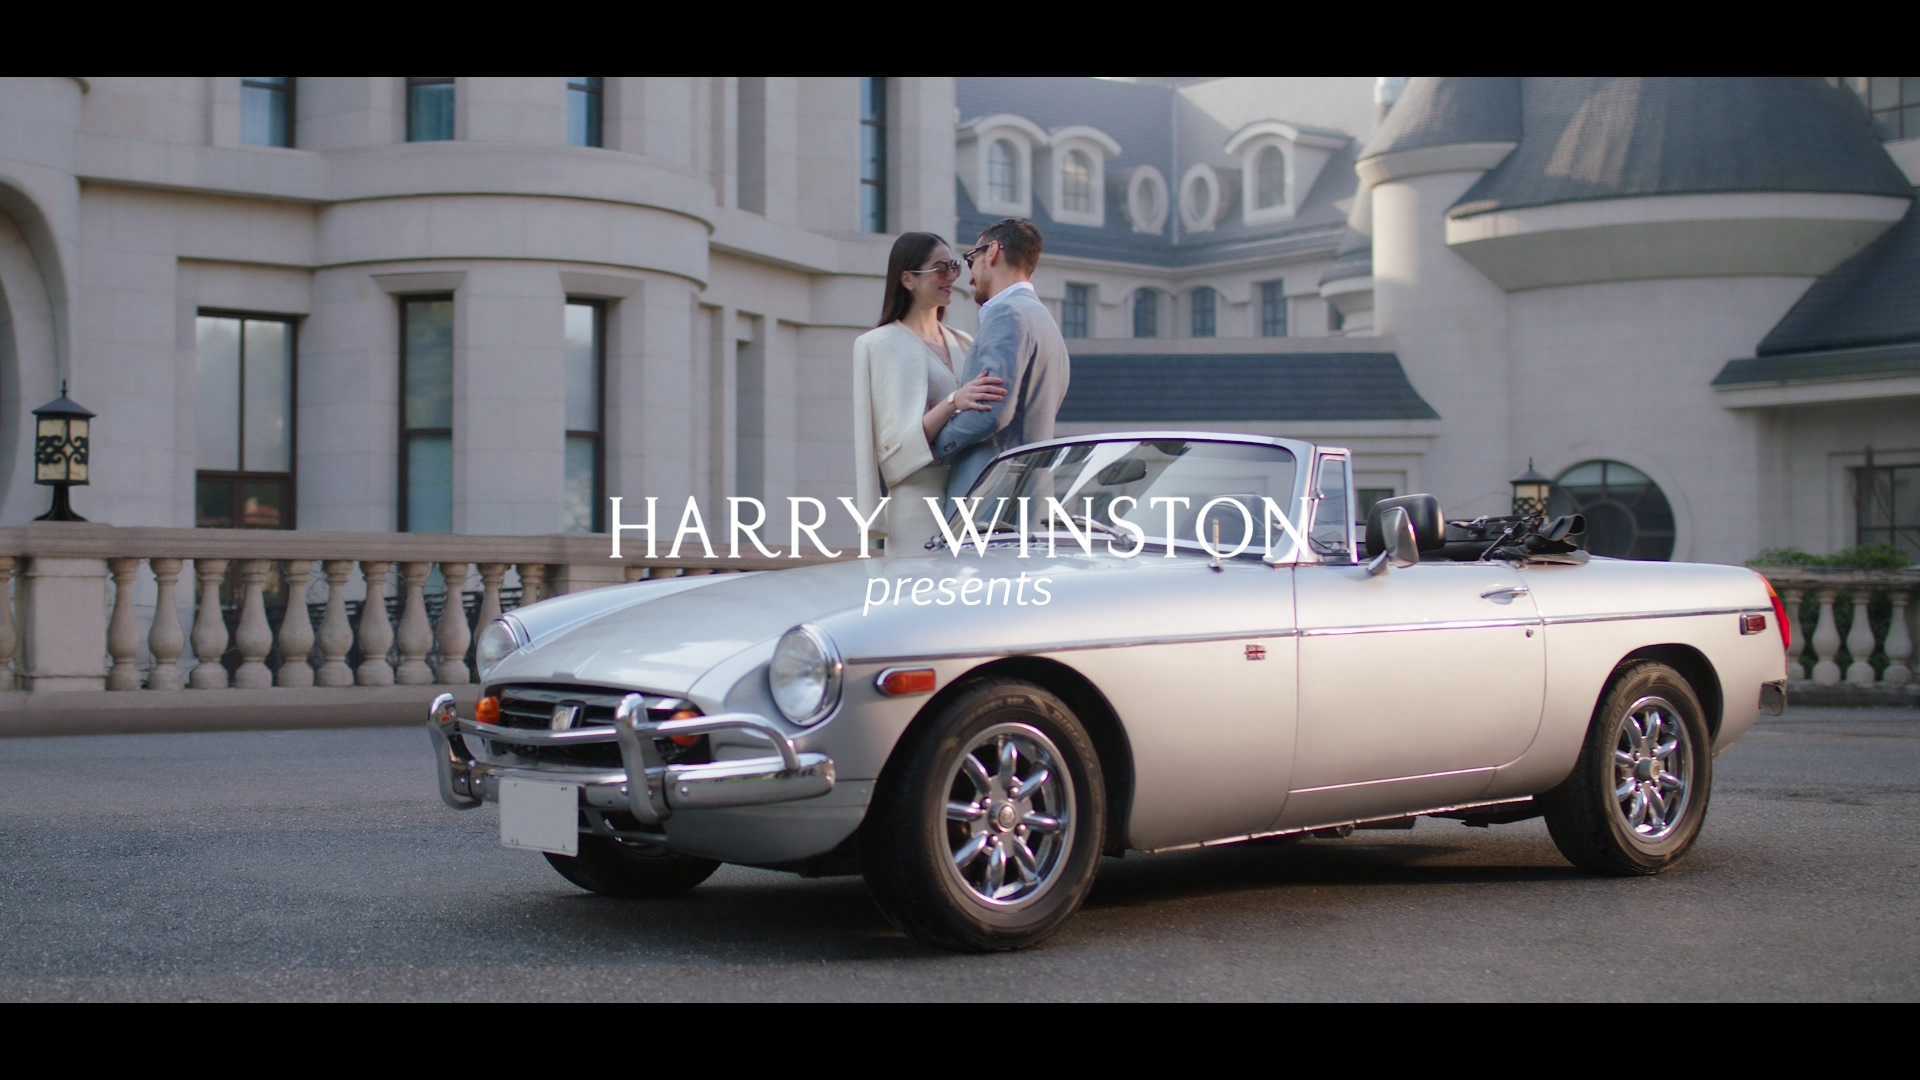 Harry Winston海瑞温斯顿广告